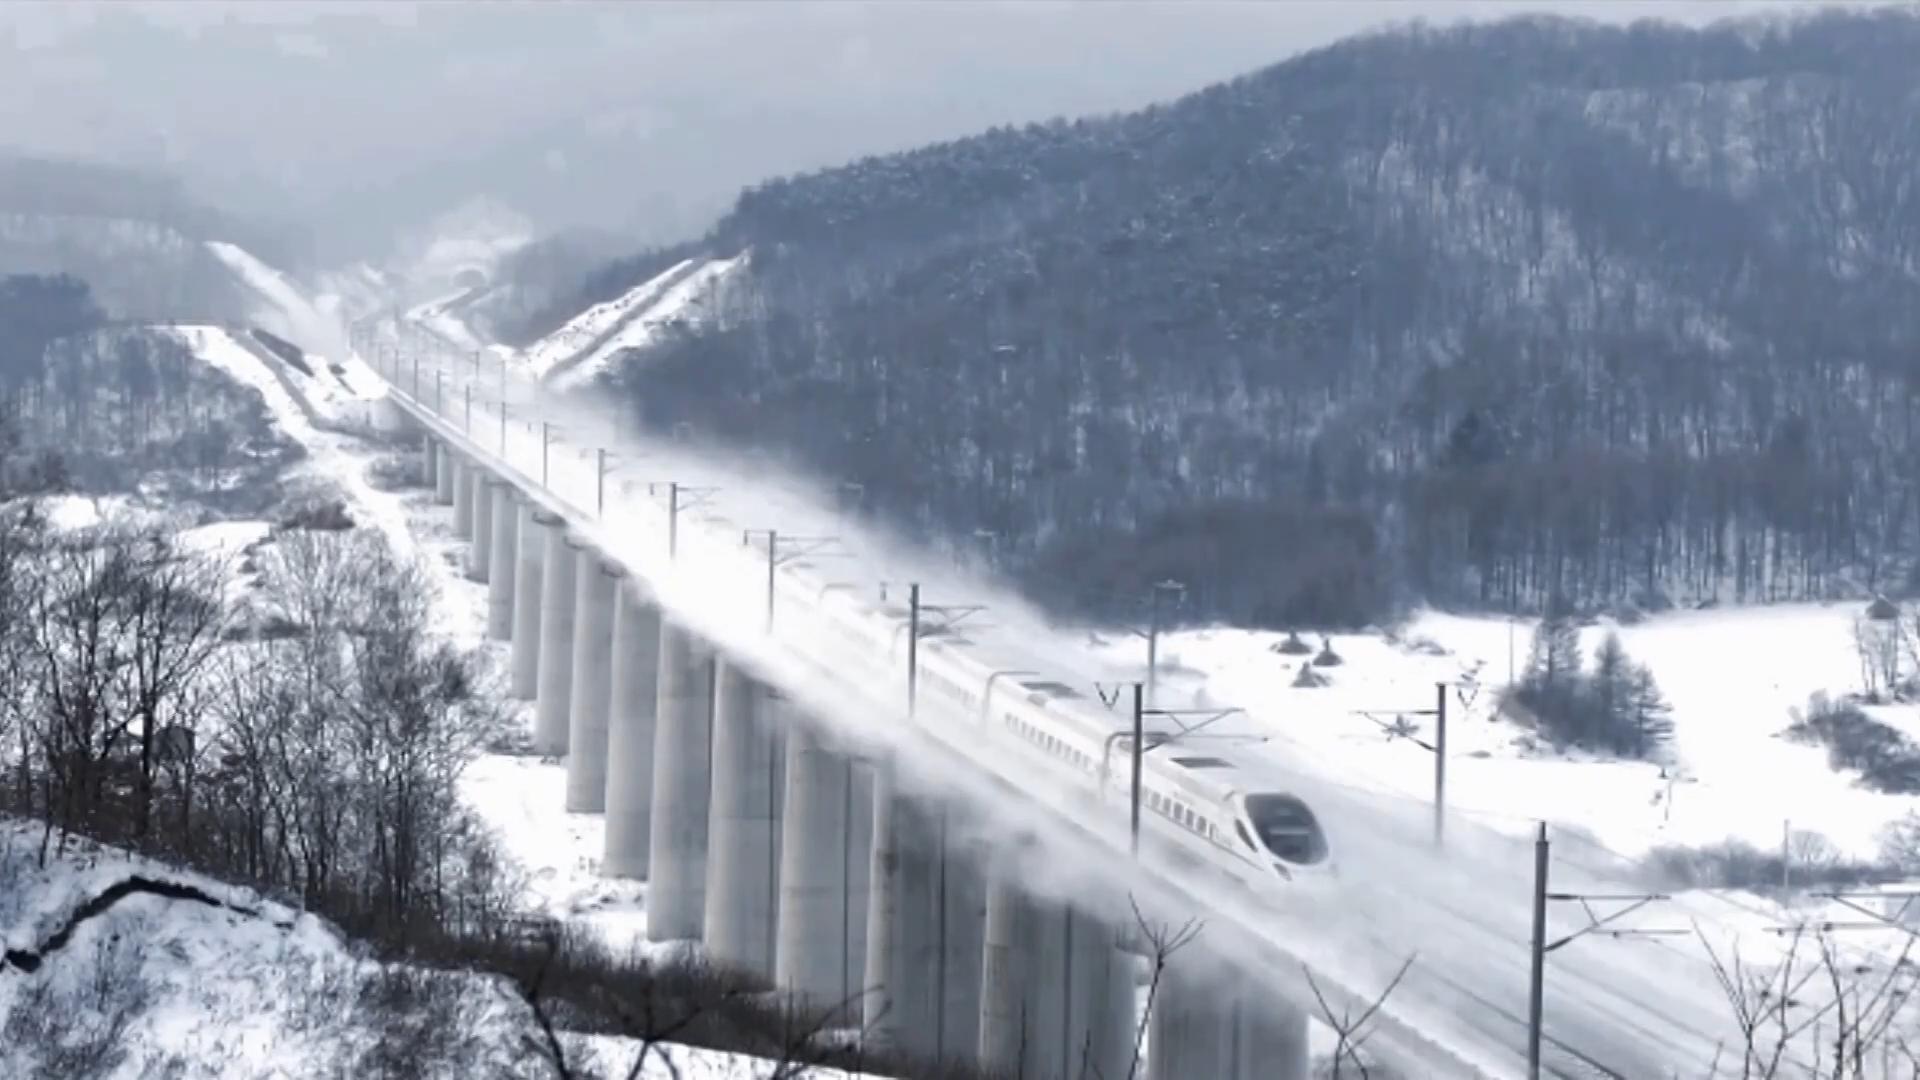 GLOBALink : ยอดโดยสาร 'ทางรถไฟความเร็วสูงเขตหนาว' ของจีน แตะ 670 ล้านเที่ยว